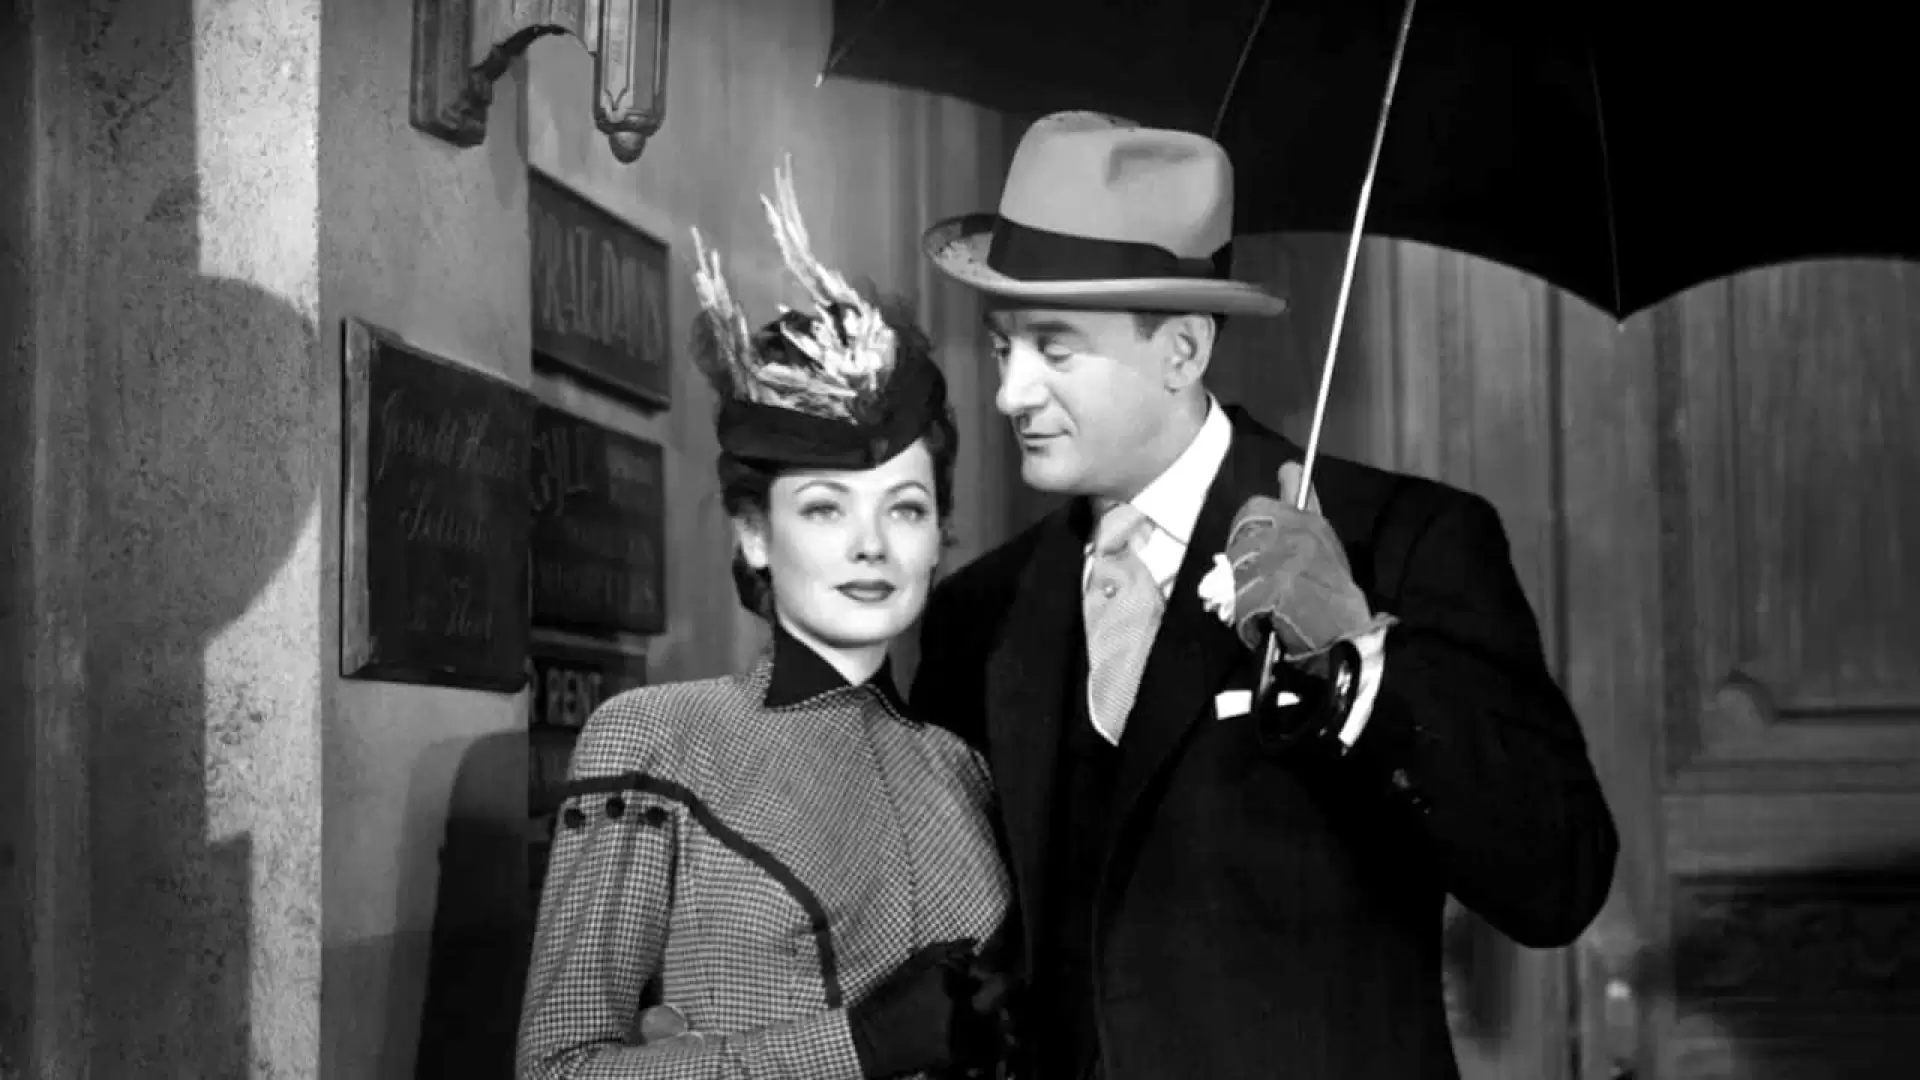 دانلود فیلم The Ghost and Mrs. Muir 1947 (روح و خانم میور) با زیرنویس فارسی